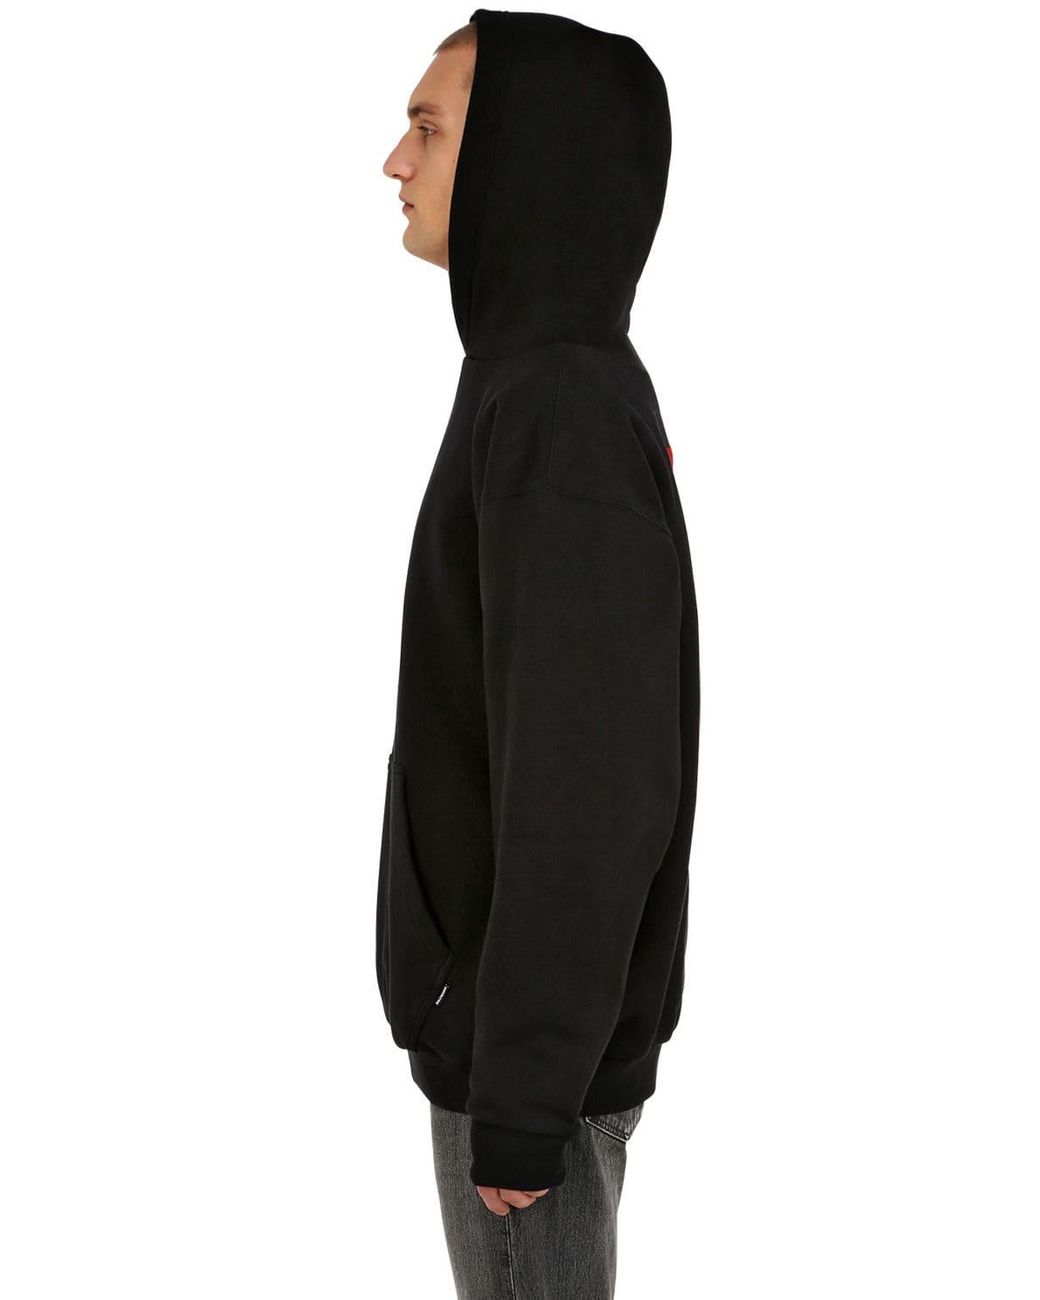 Balenciaga I Love Techno Embroidered Sweatshirt in Black for Men - Lyst